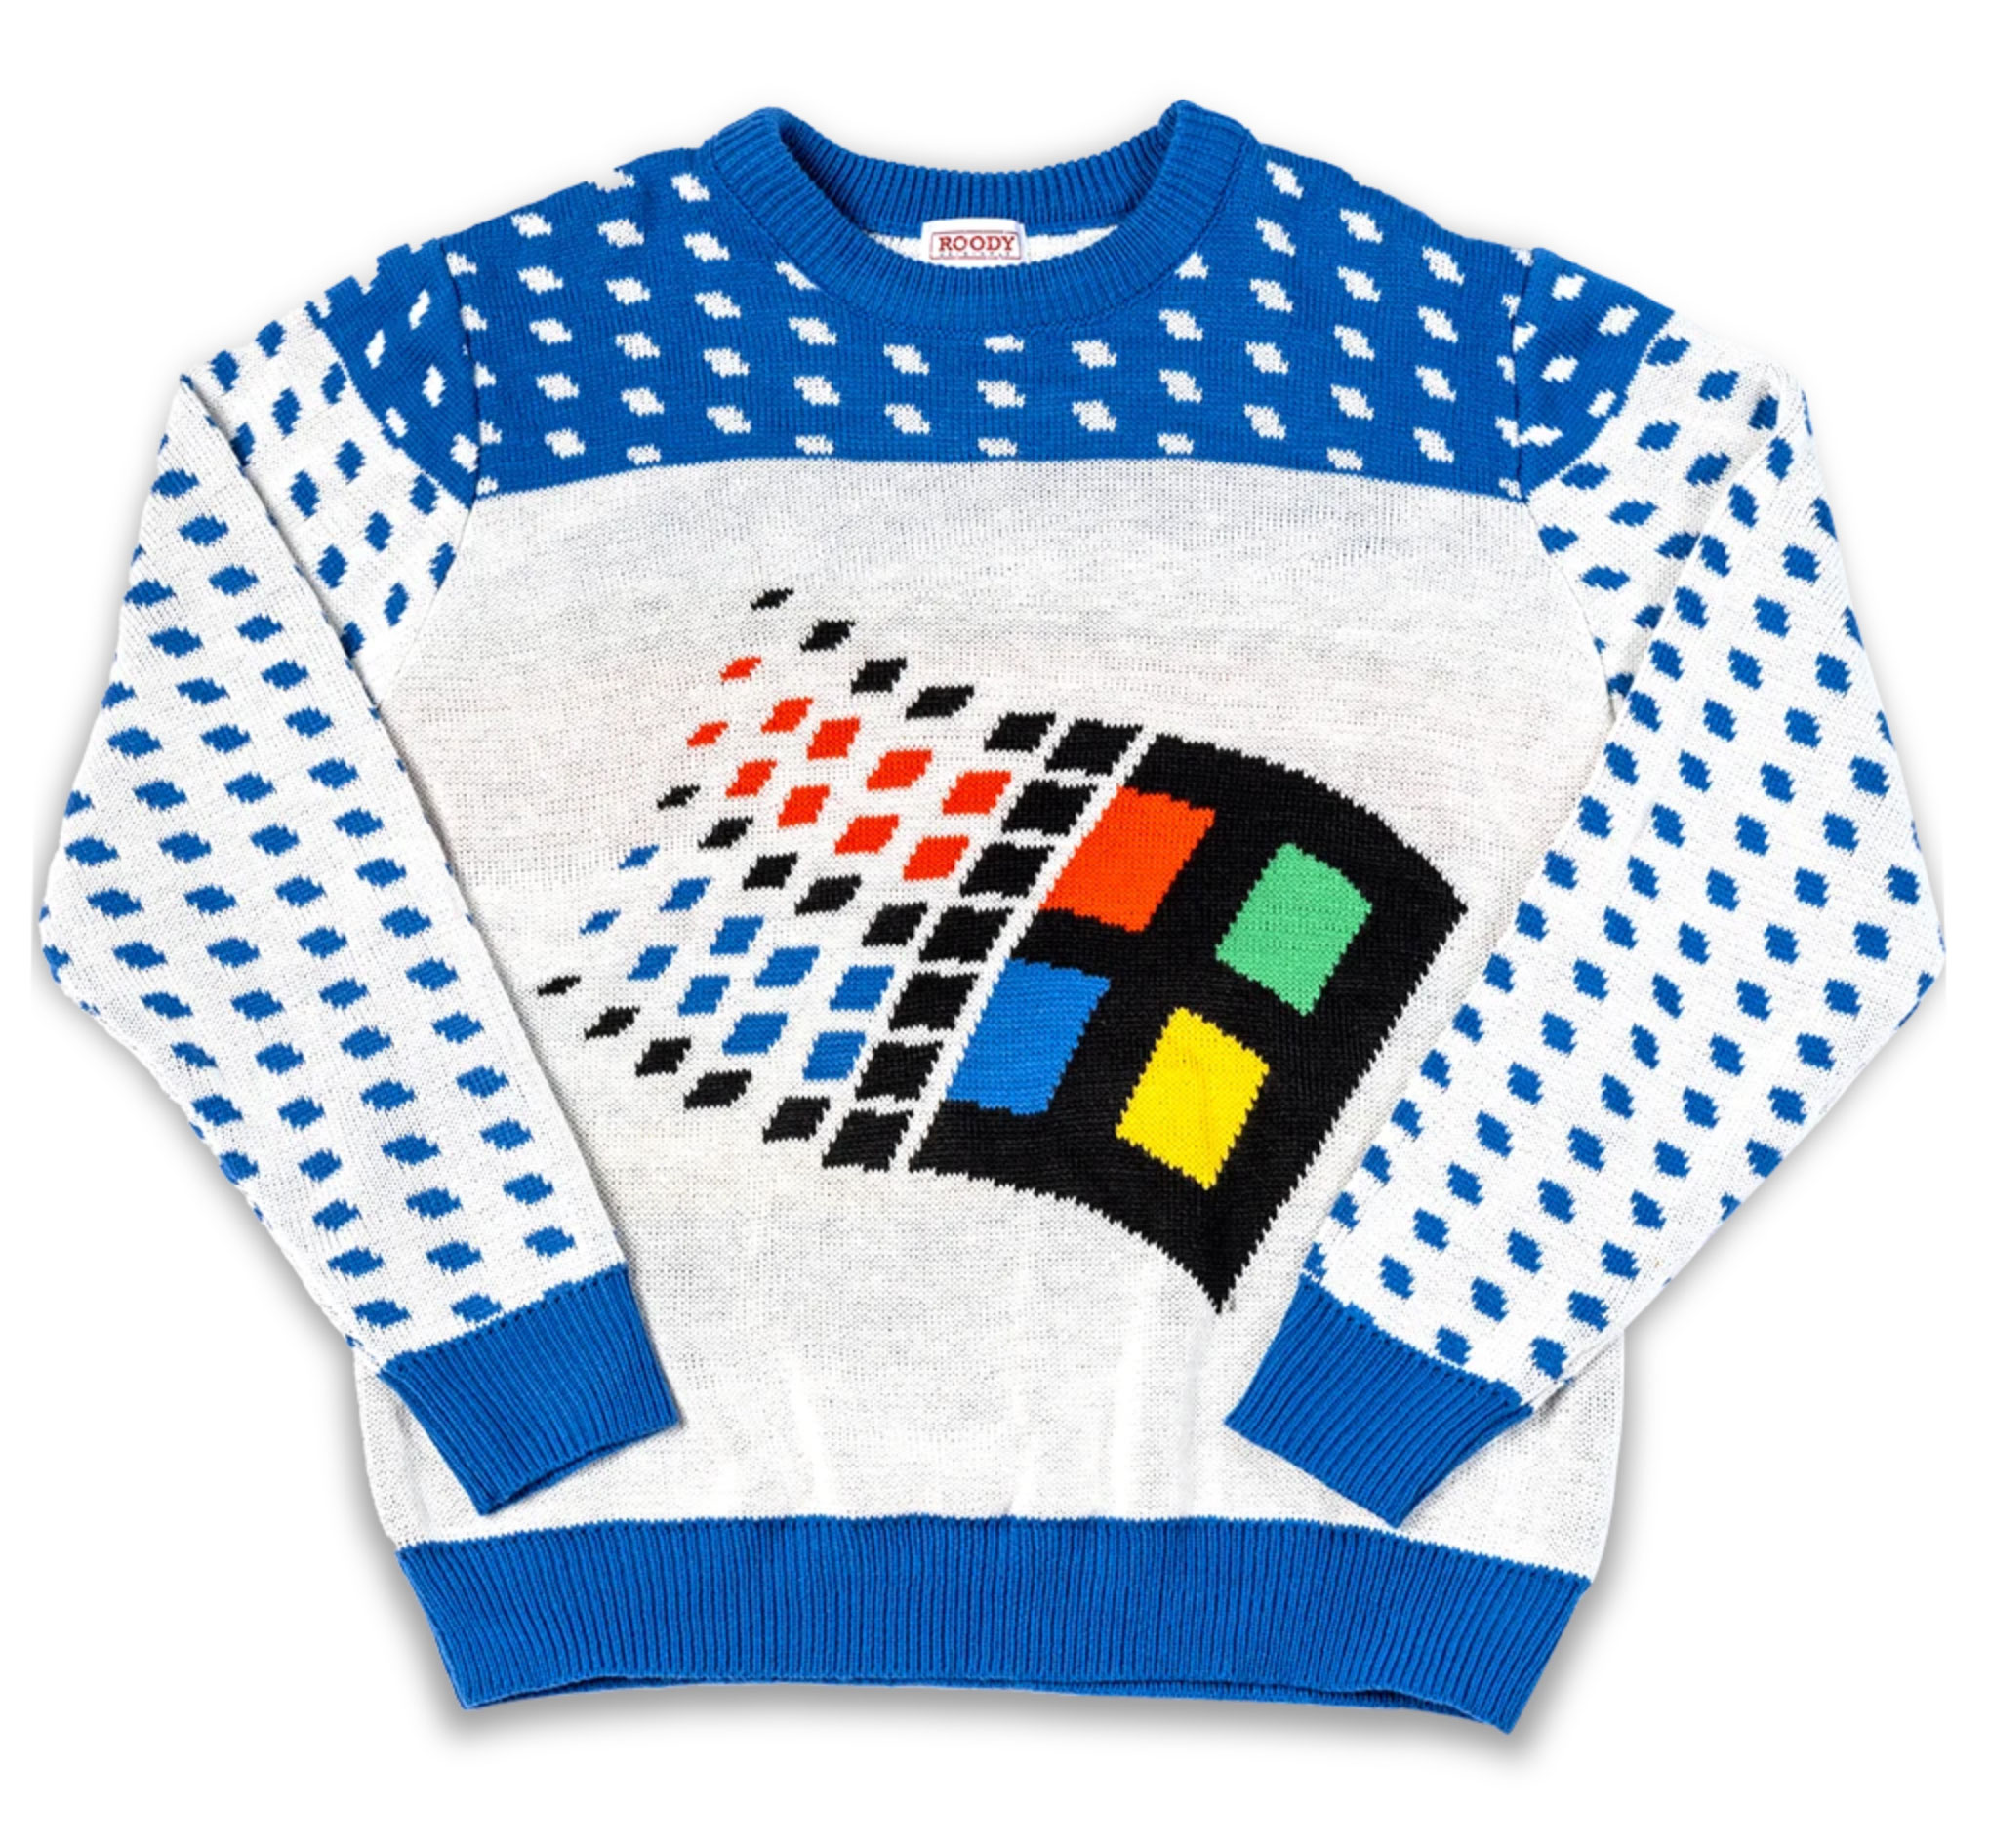 windows 95 ugly sweater